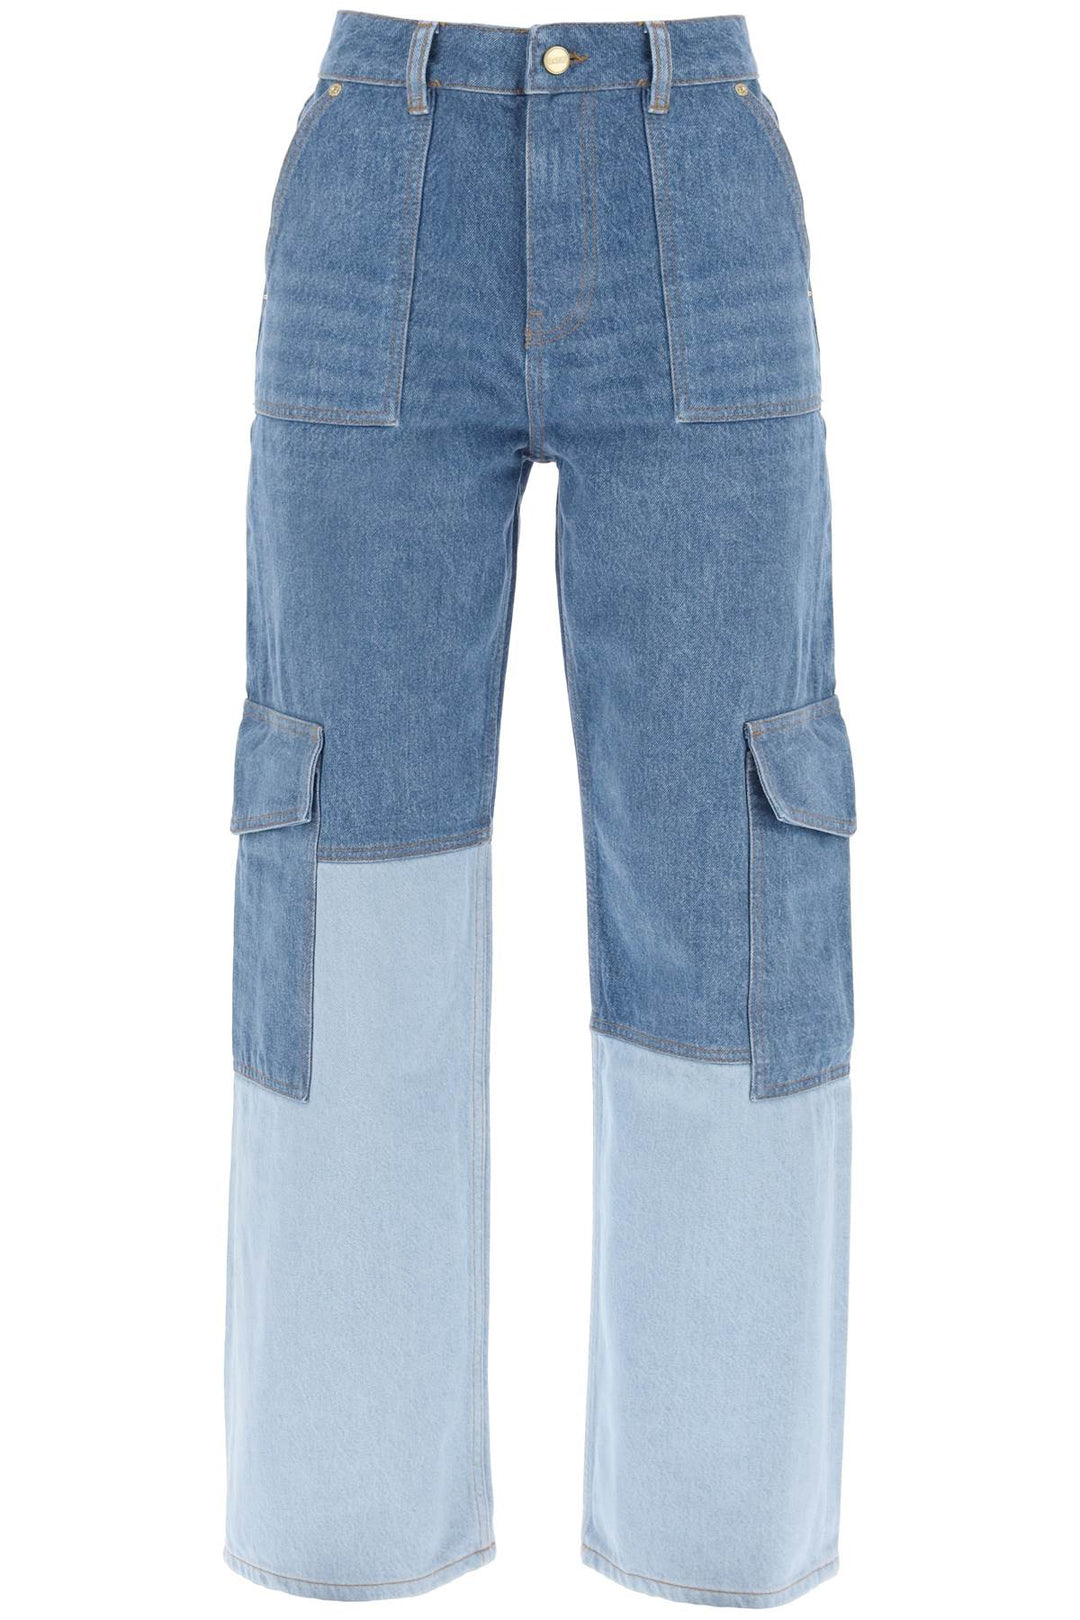 angi jeans-0